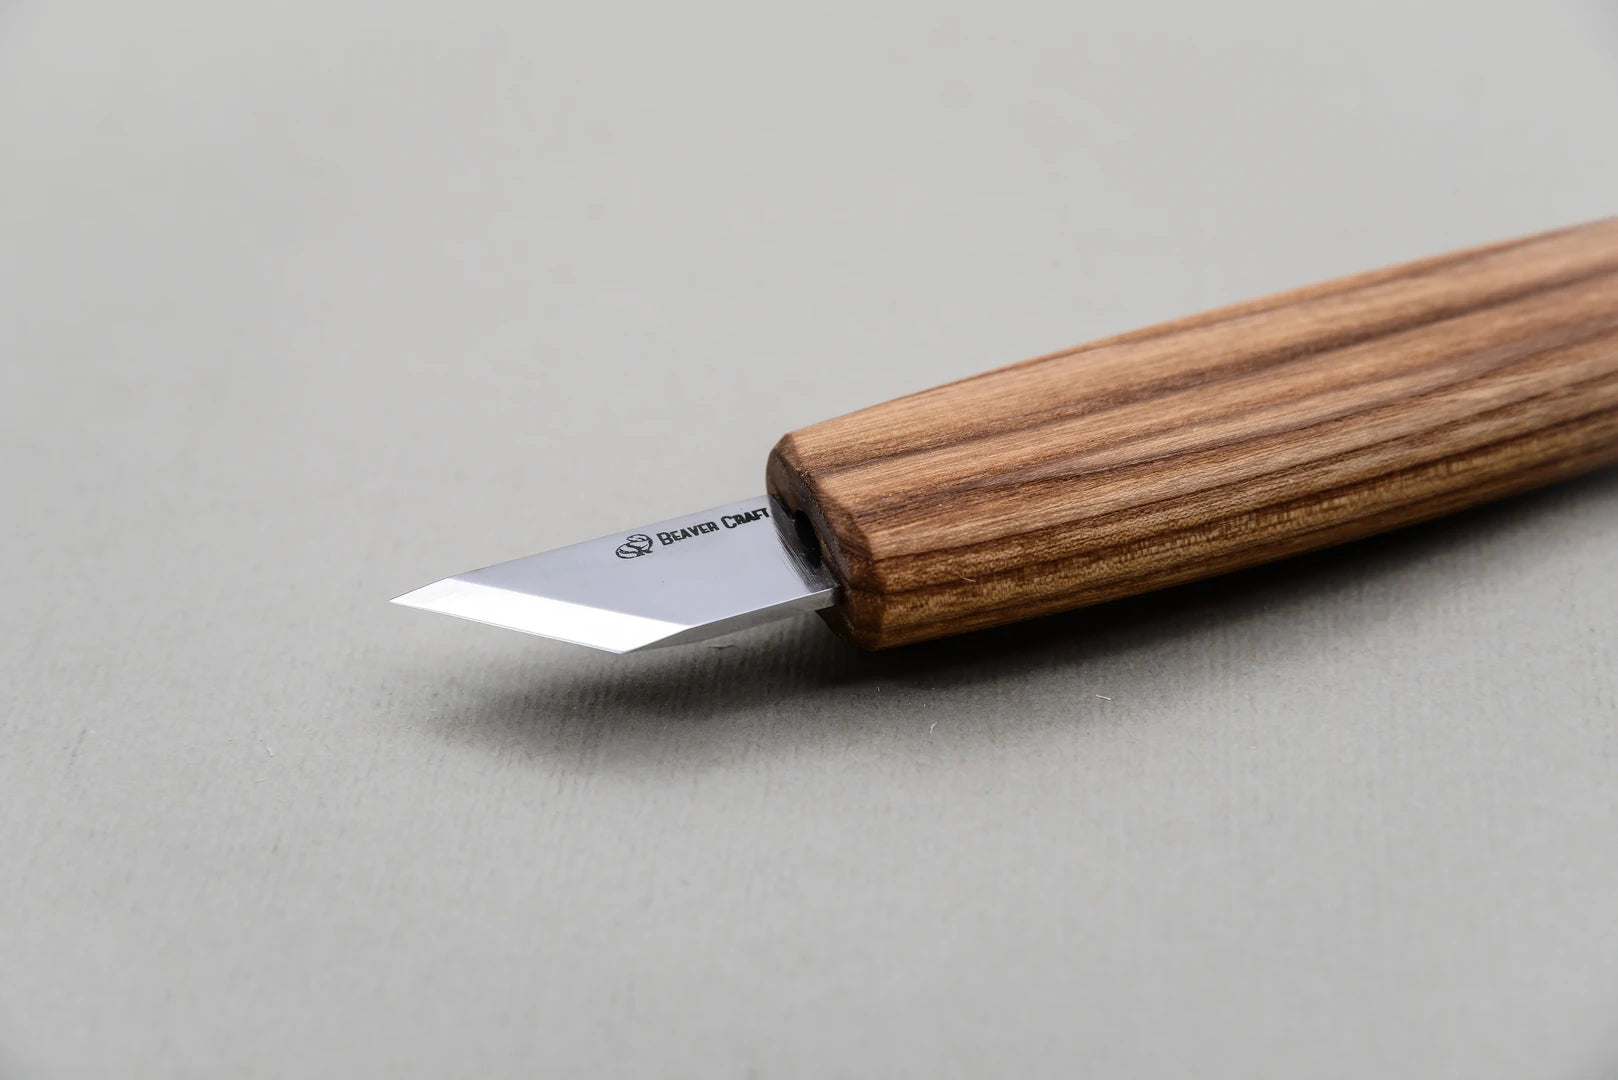 BeaverCraft - What angle to strop a knife? 🤔 #beavercraft_tips